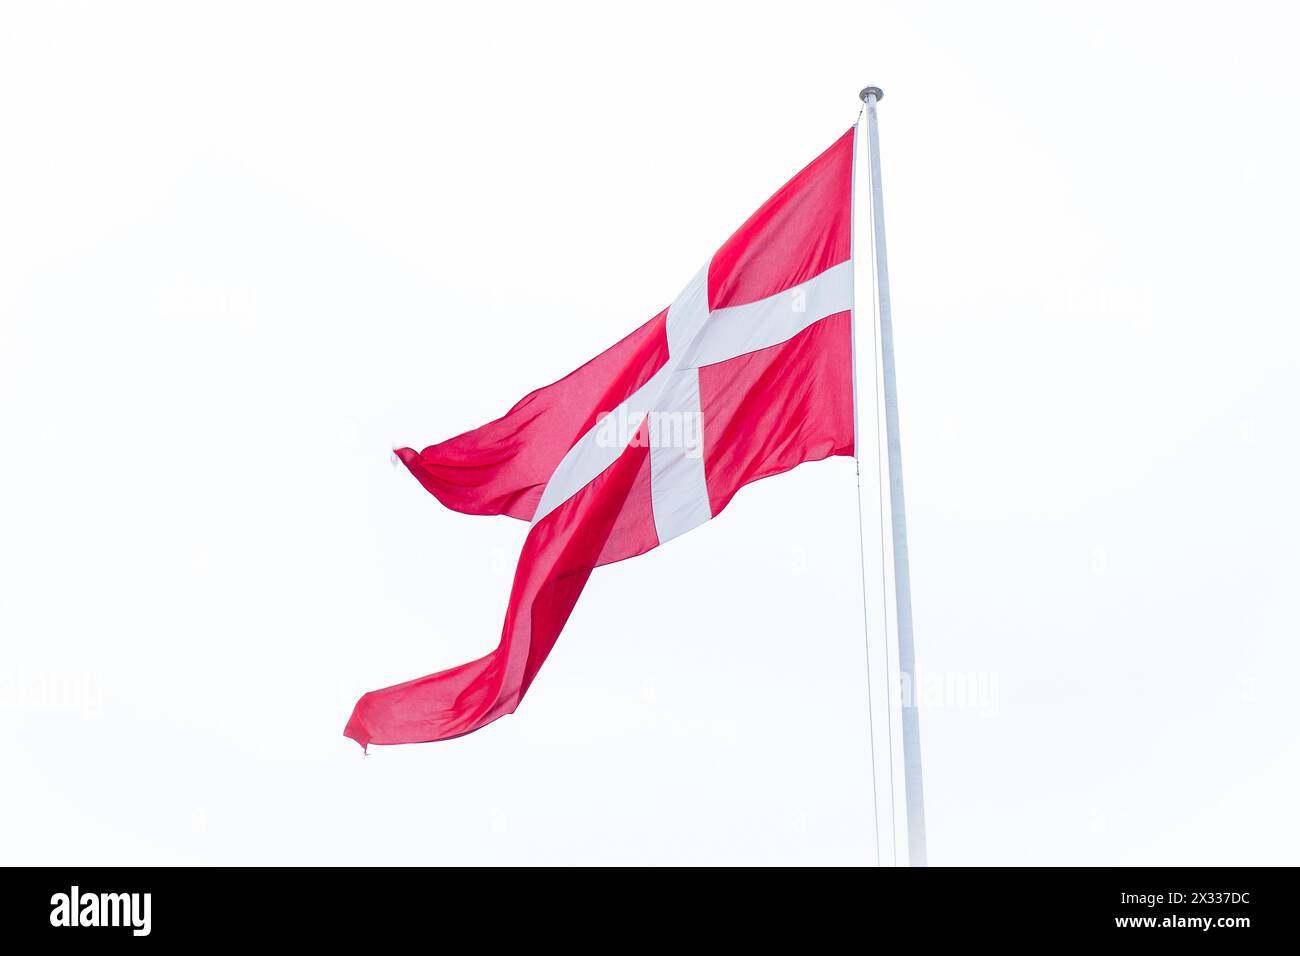 Flag of Denmark on white cloudy sky background. Stock Photo